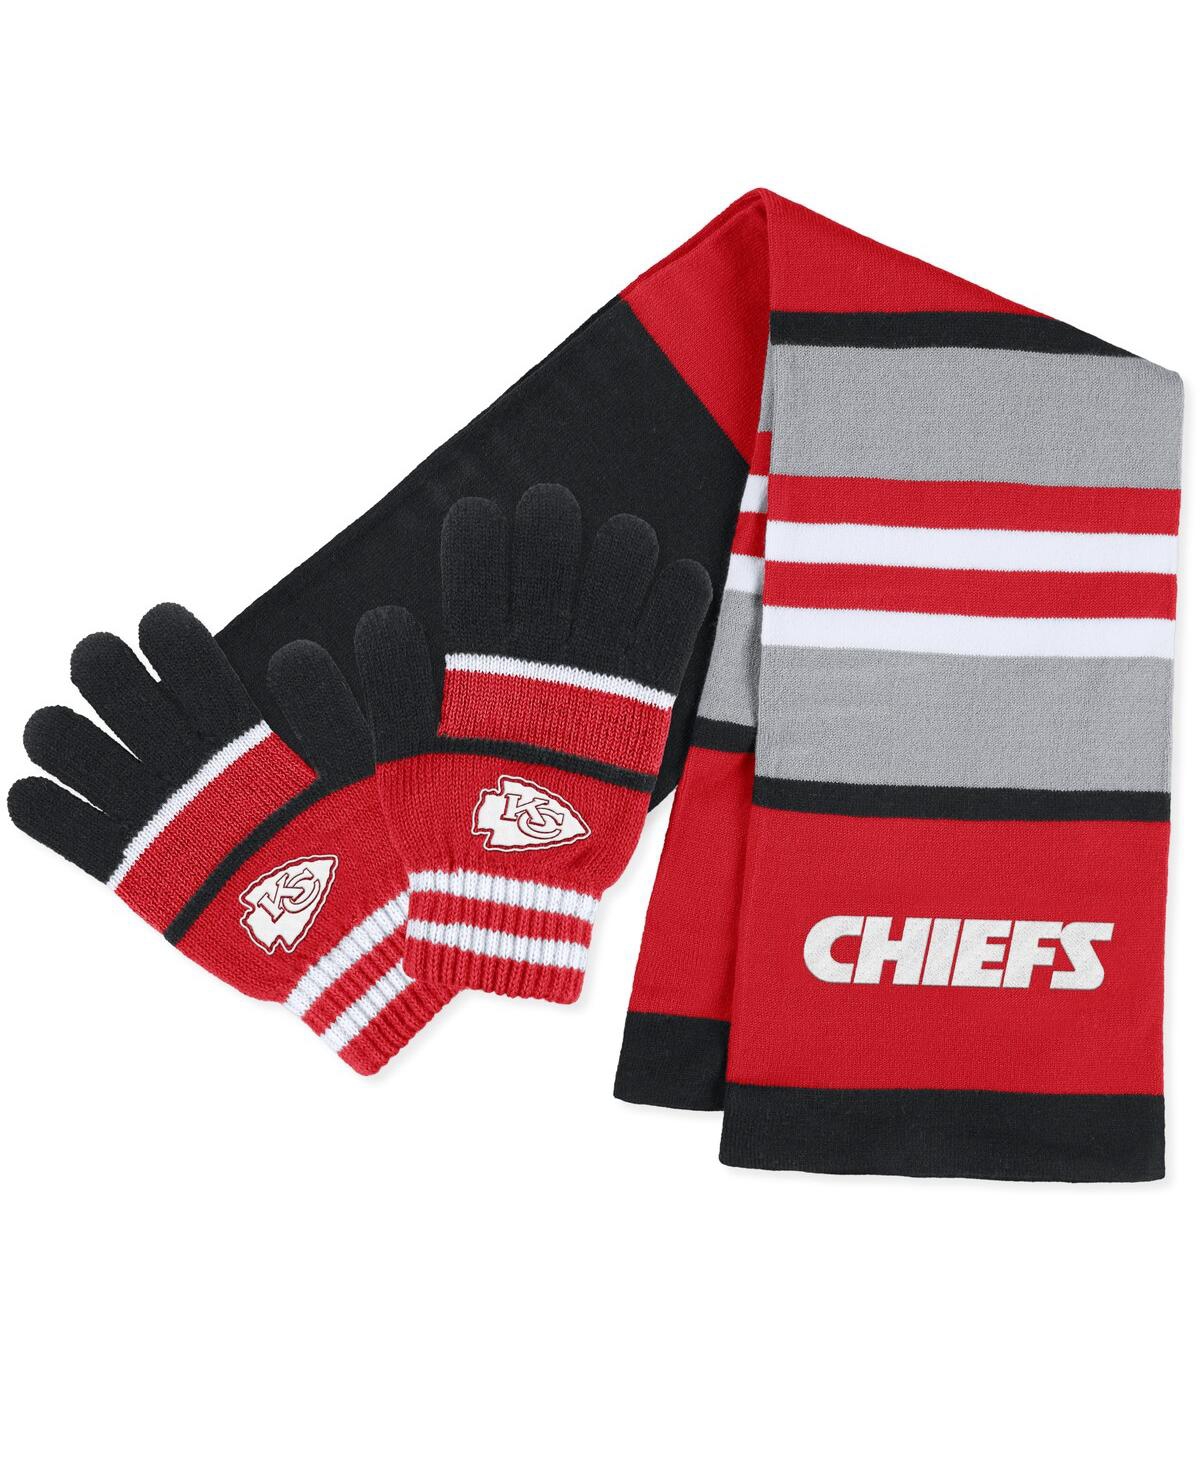 Women's Wear by Erin Andrews Kansas City Chiefs Stripe Glove and Scarf Set - Red, Black